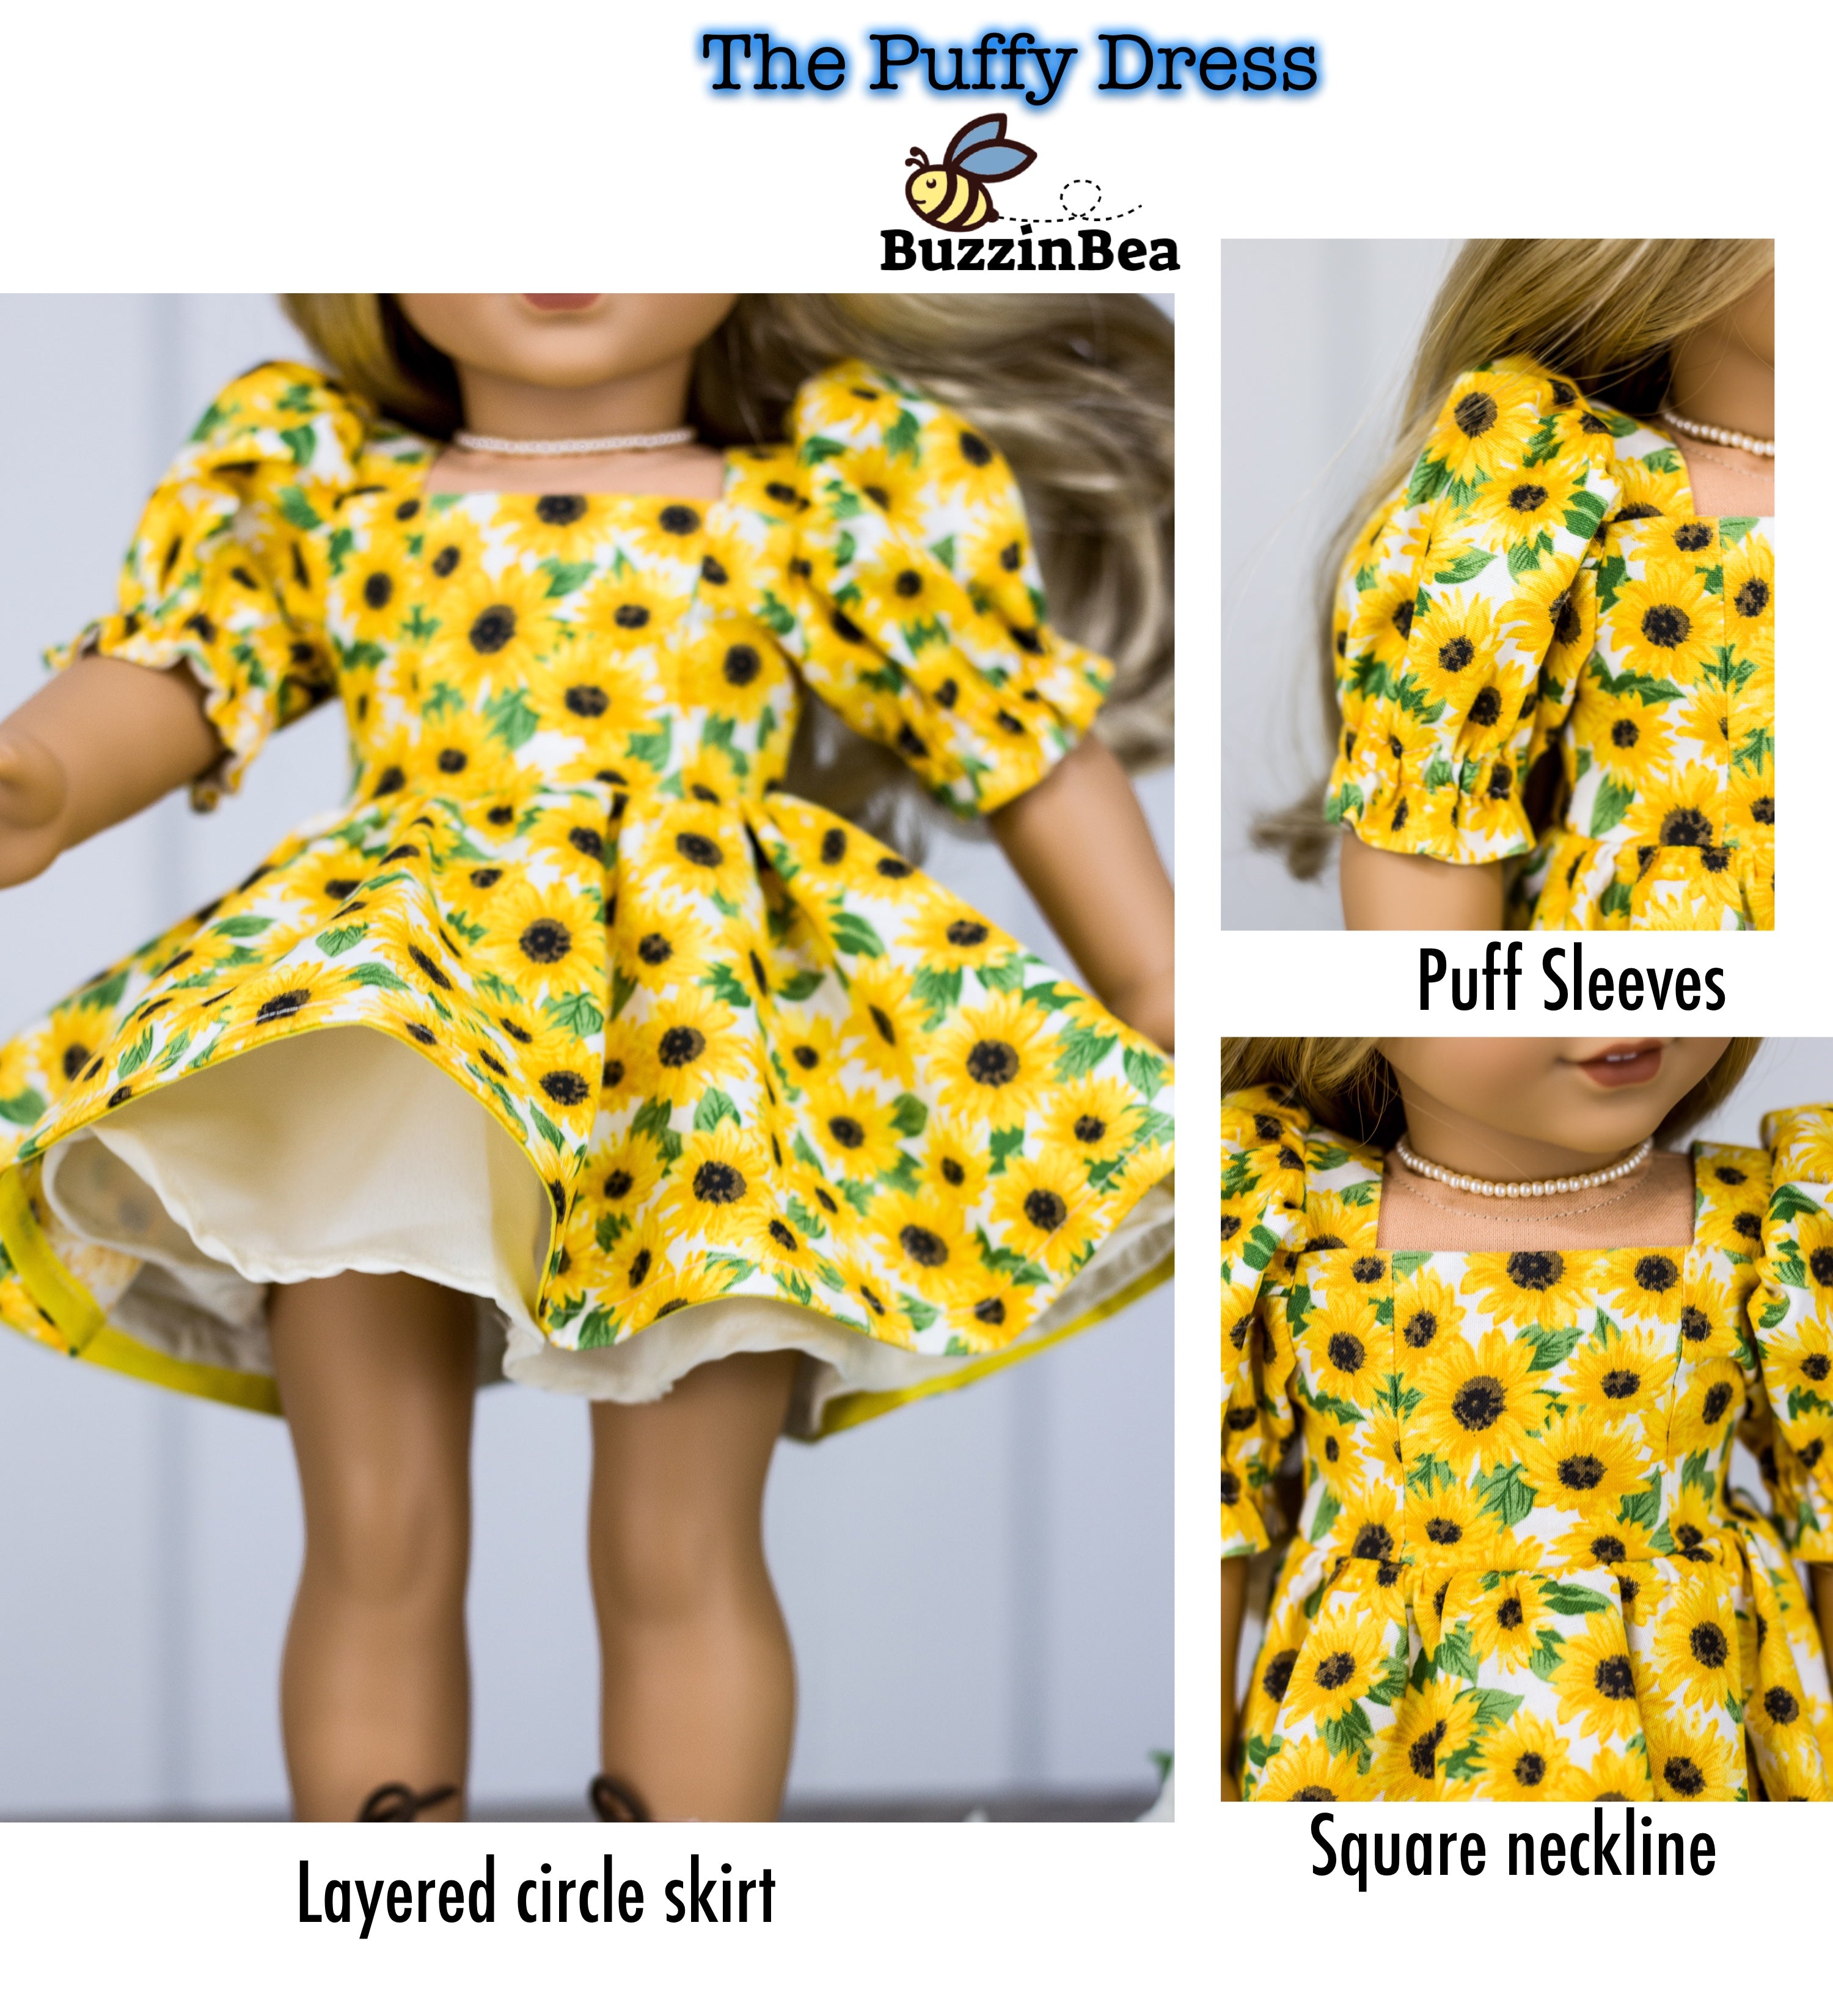 PDF Pattern SS2016-03. Madeleine Dress for 18-inch Dolls Such 